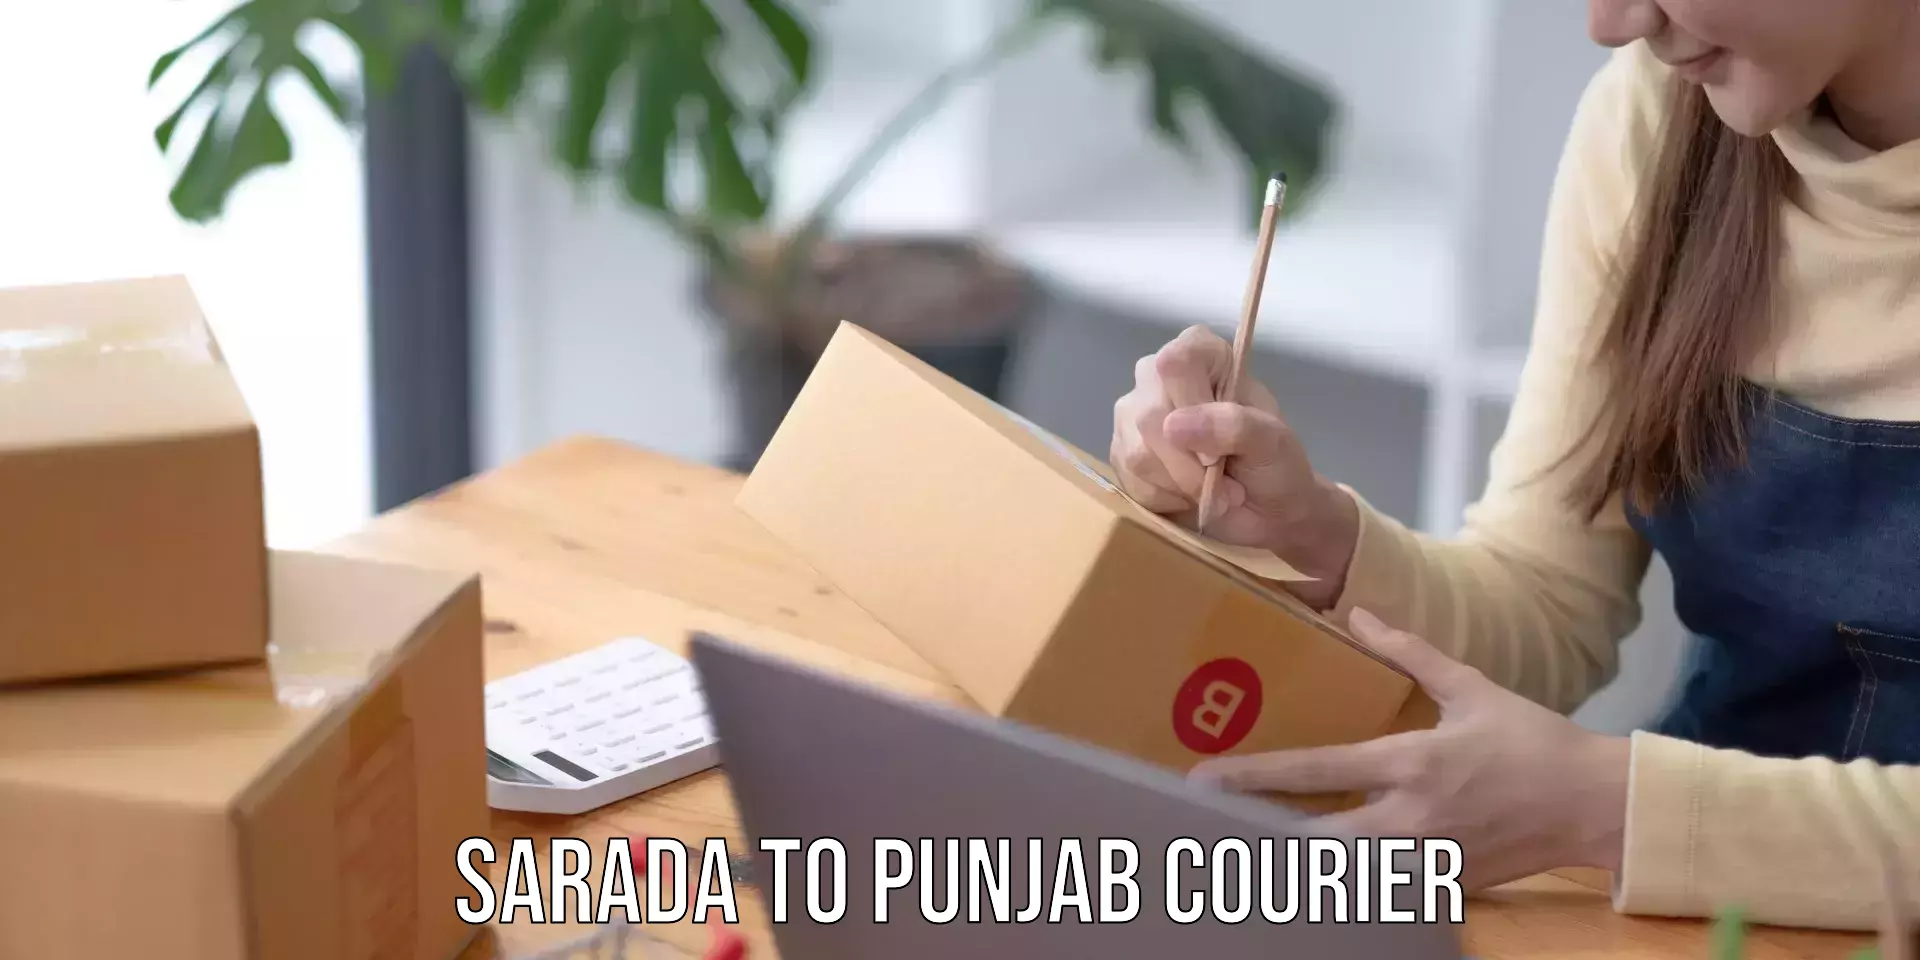 Doorstep delivery service Sarada to Punjab